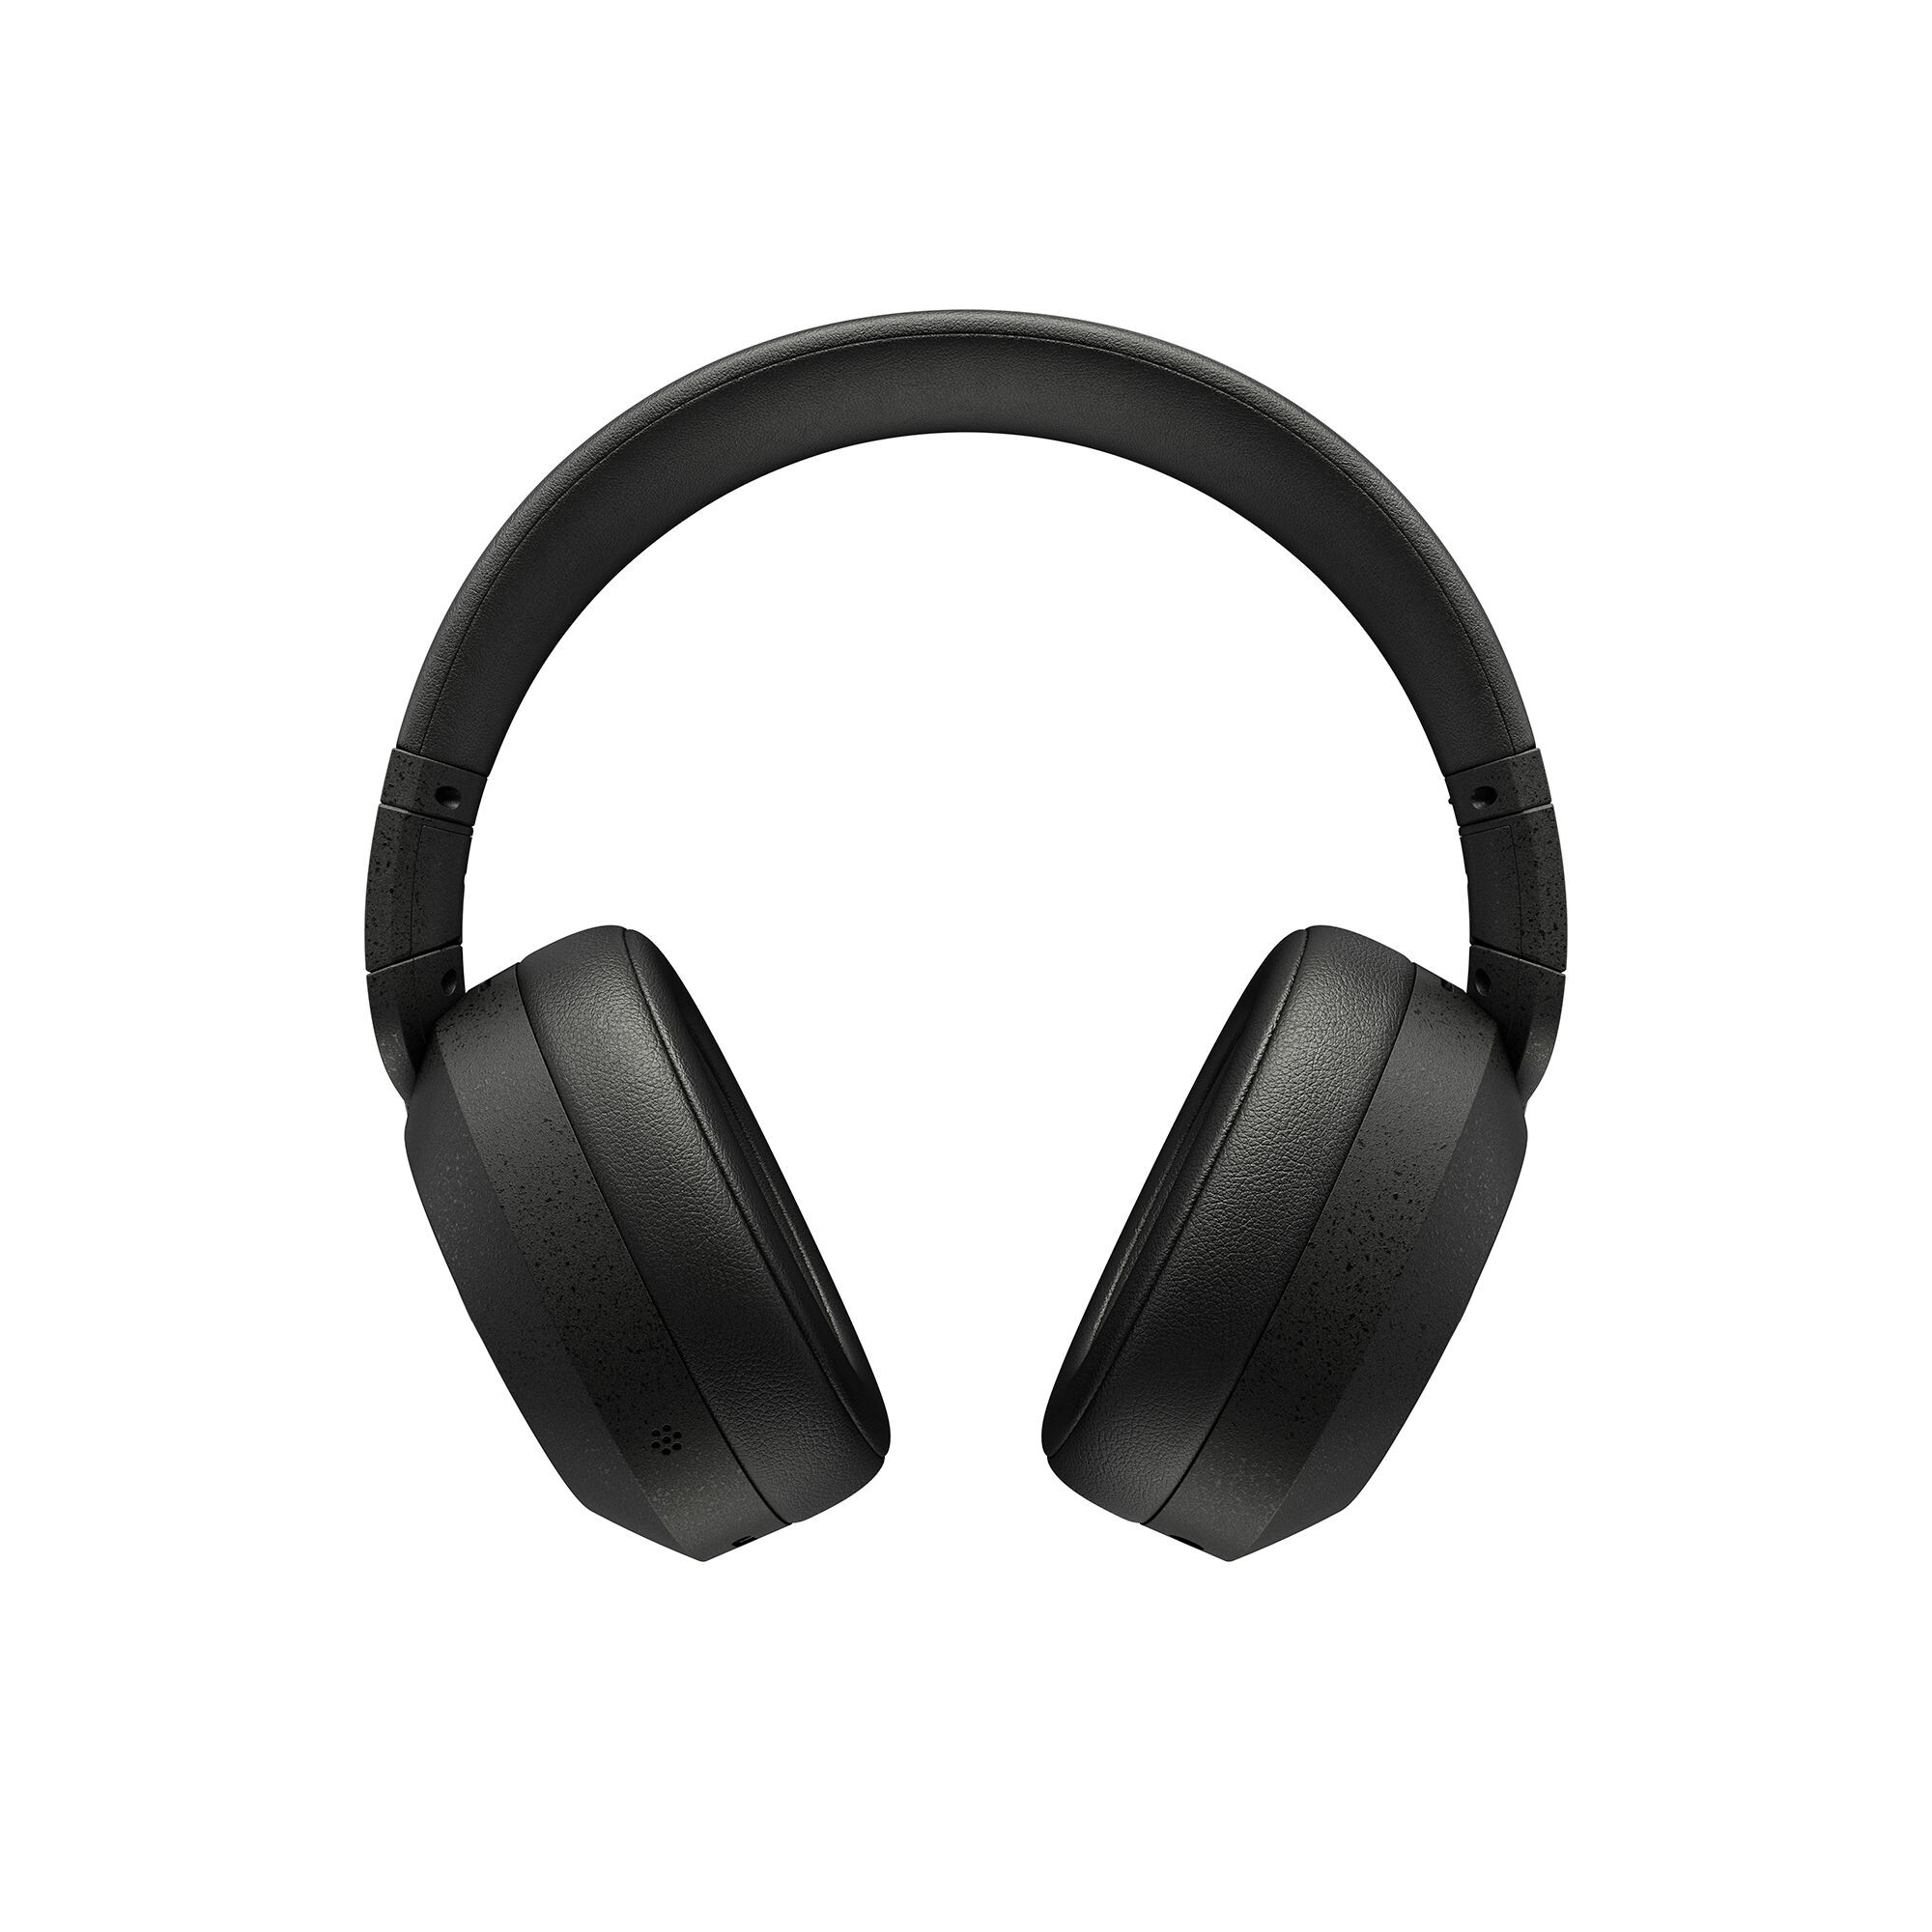 Yamaha-YH-E700B-Wireless-Over-Ear-Kopfhorer-schwarz